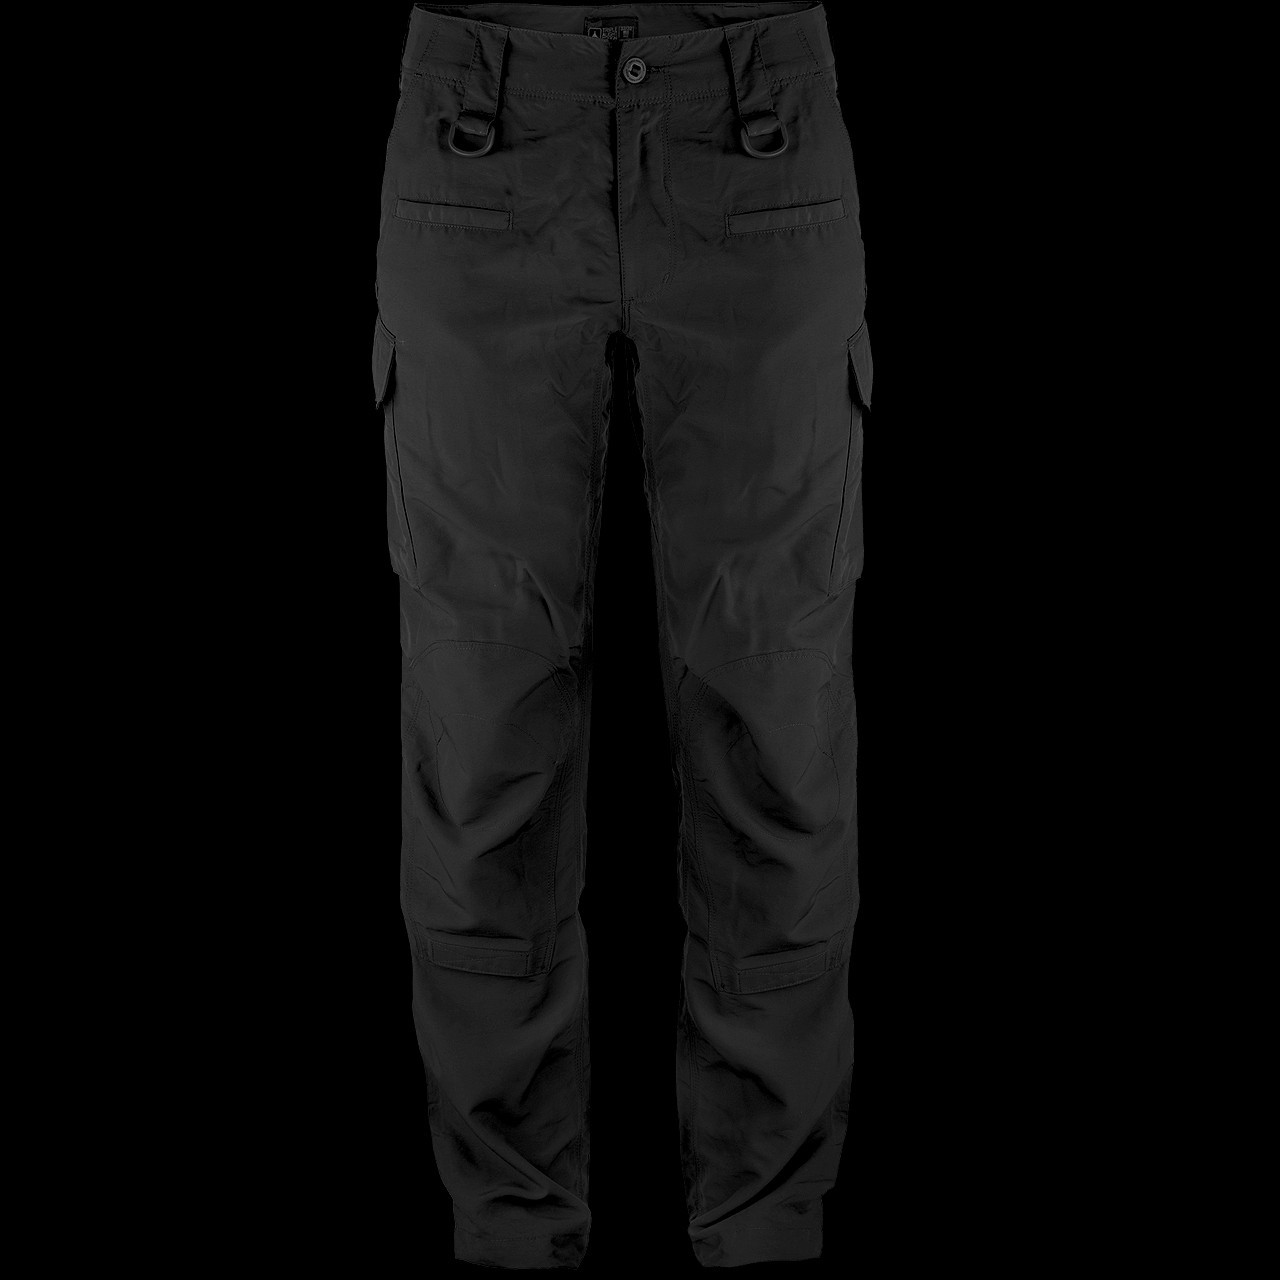 Shop BLACKTAILOR Unisex Street Style Cotton Military Cargo Pants (C50 CARGO  black) by ClassyVision | BUYMA